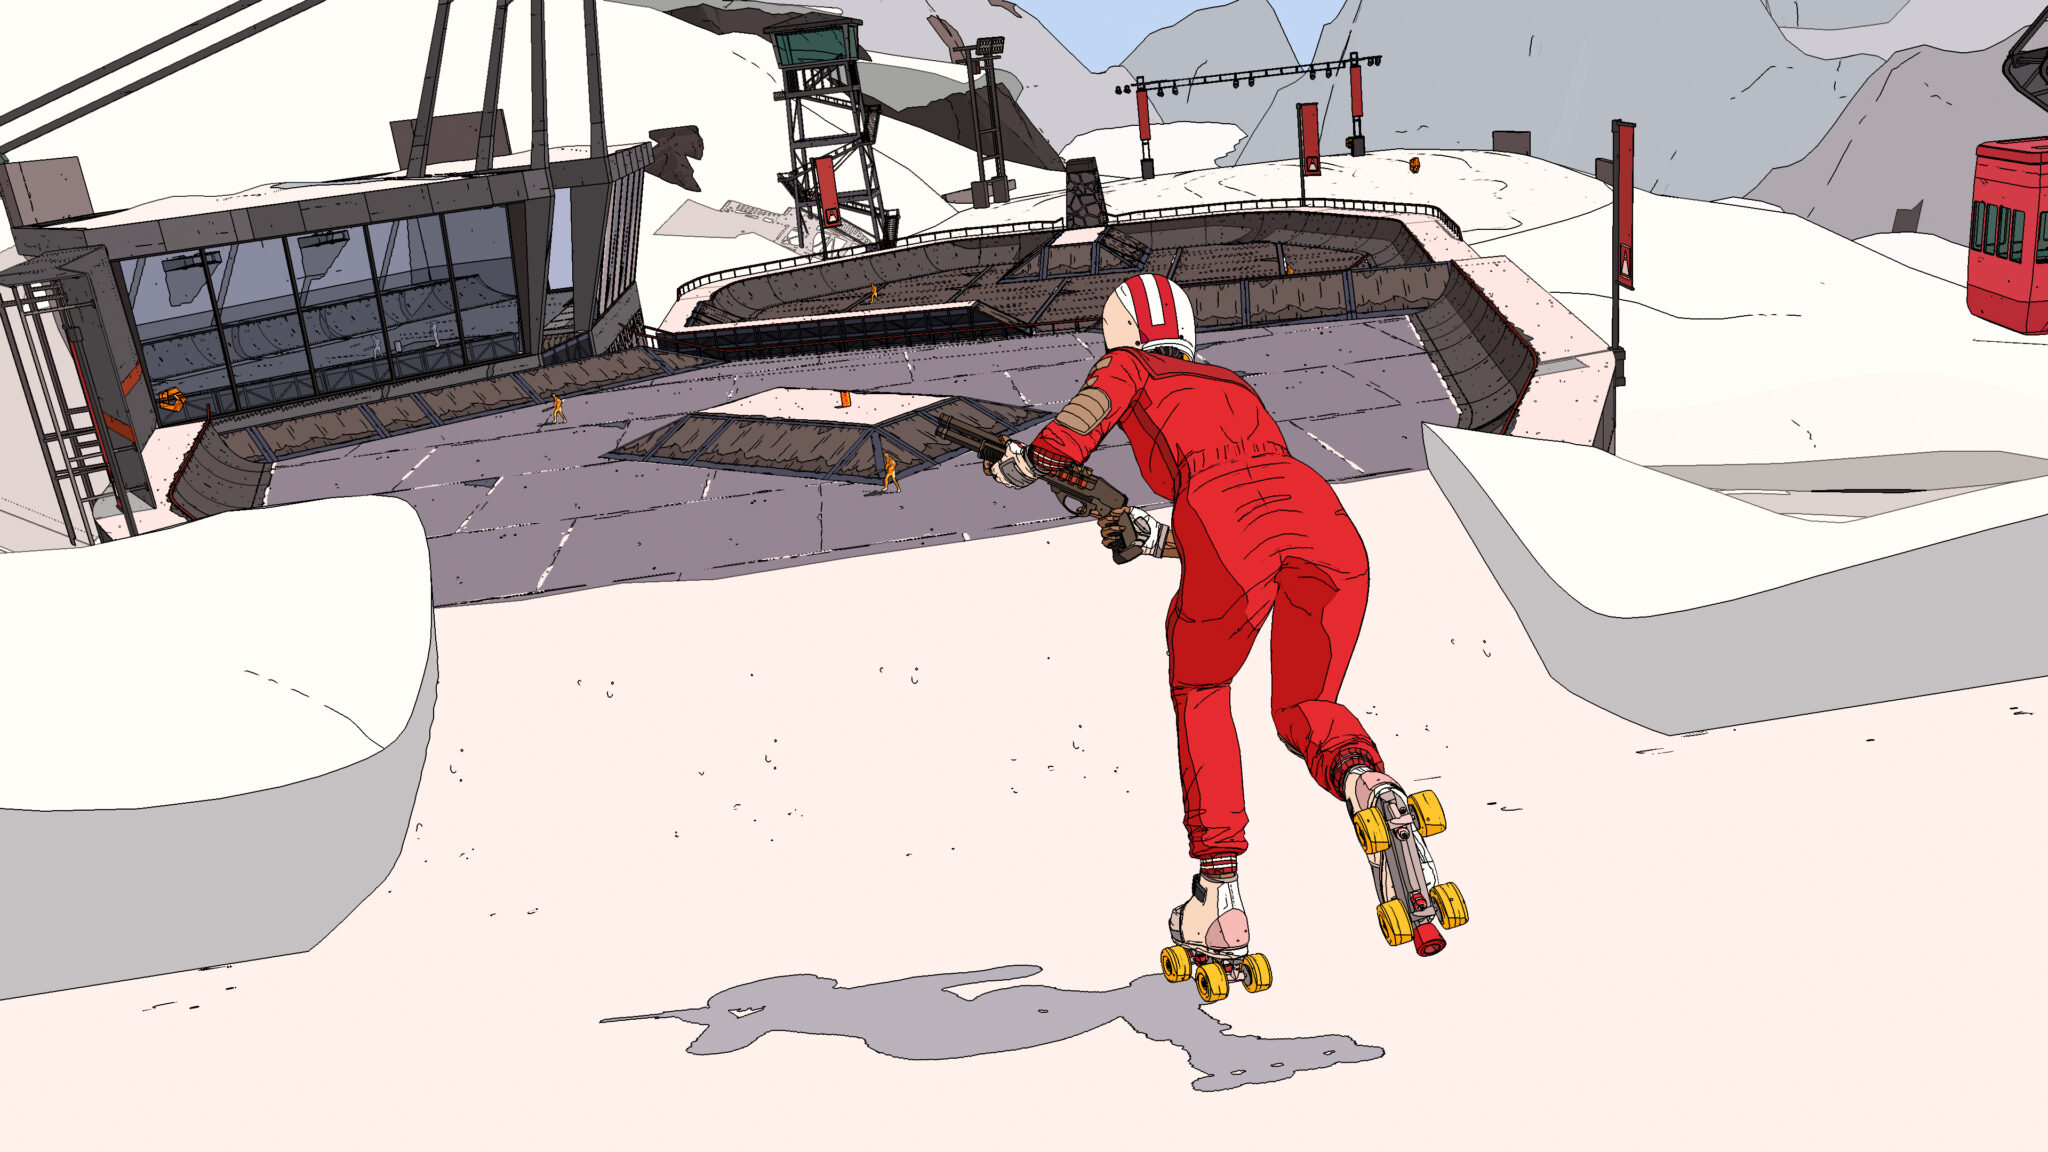 Rollerdrom screenshot of Kara skating down a ramp towards enemies with a shotgun in hand